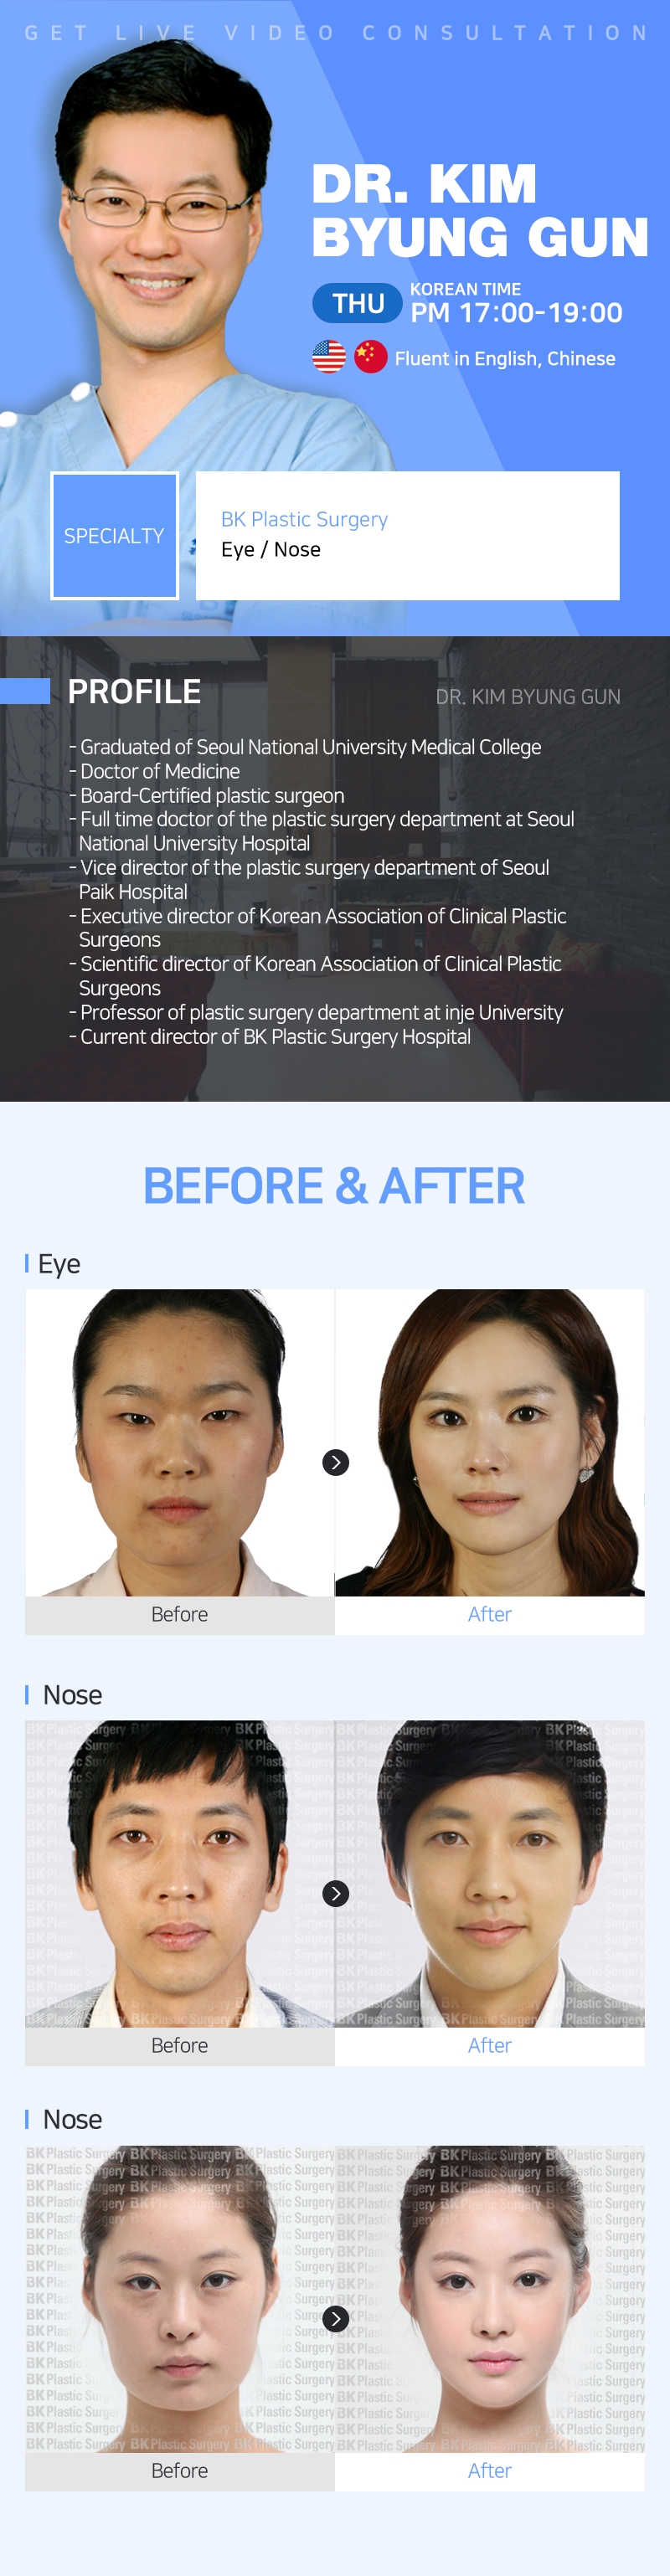 Dr. Kim Byung Gun